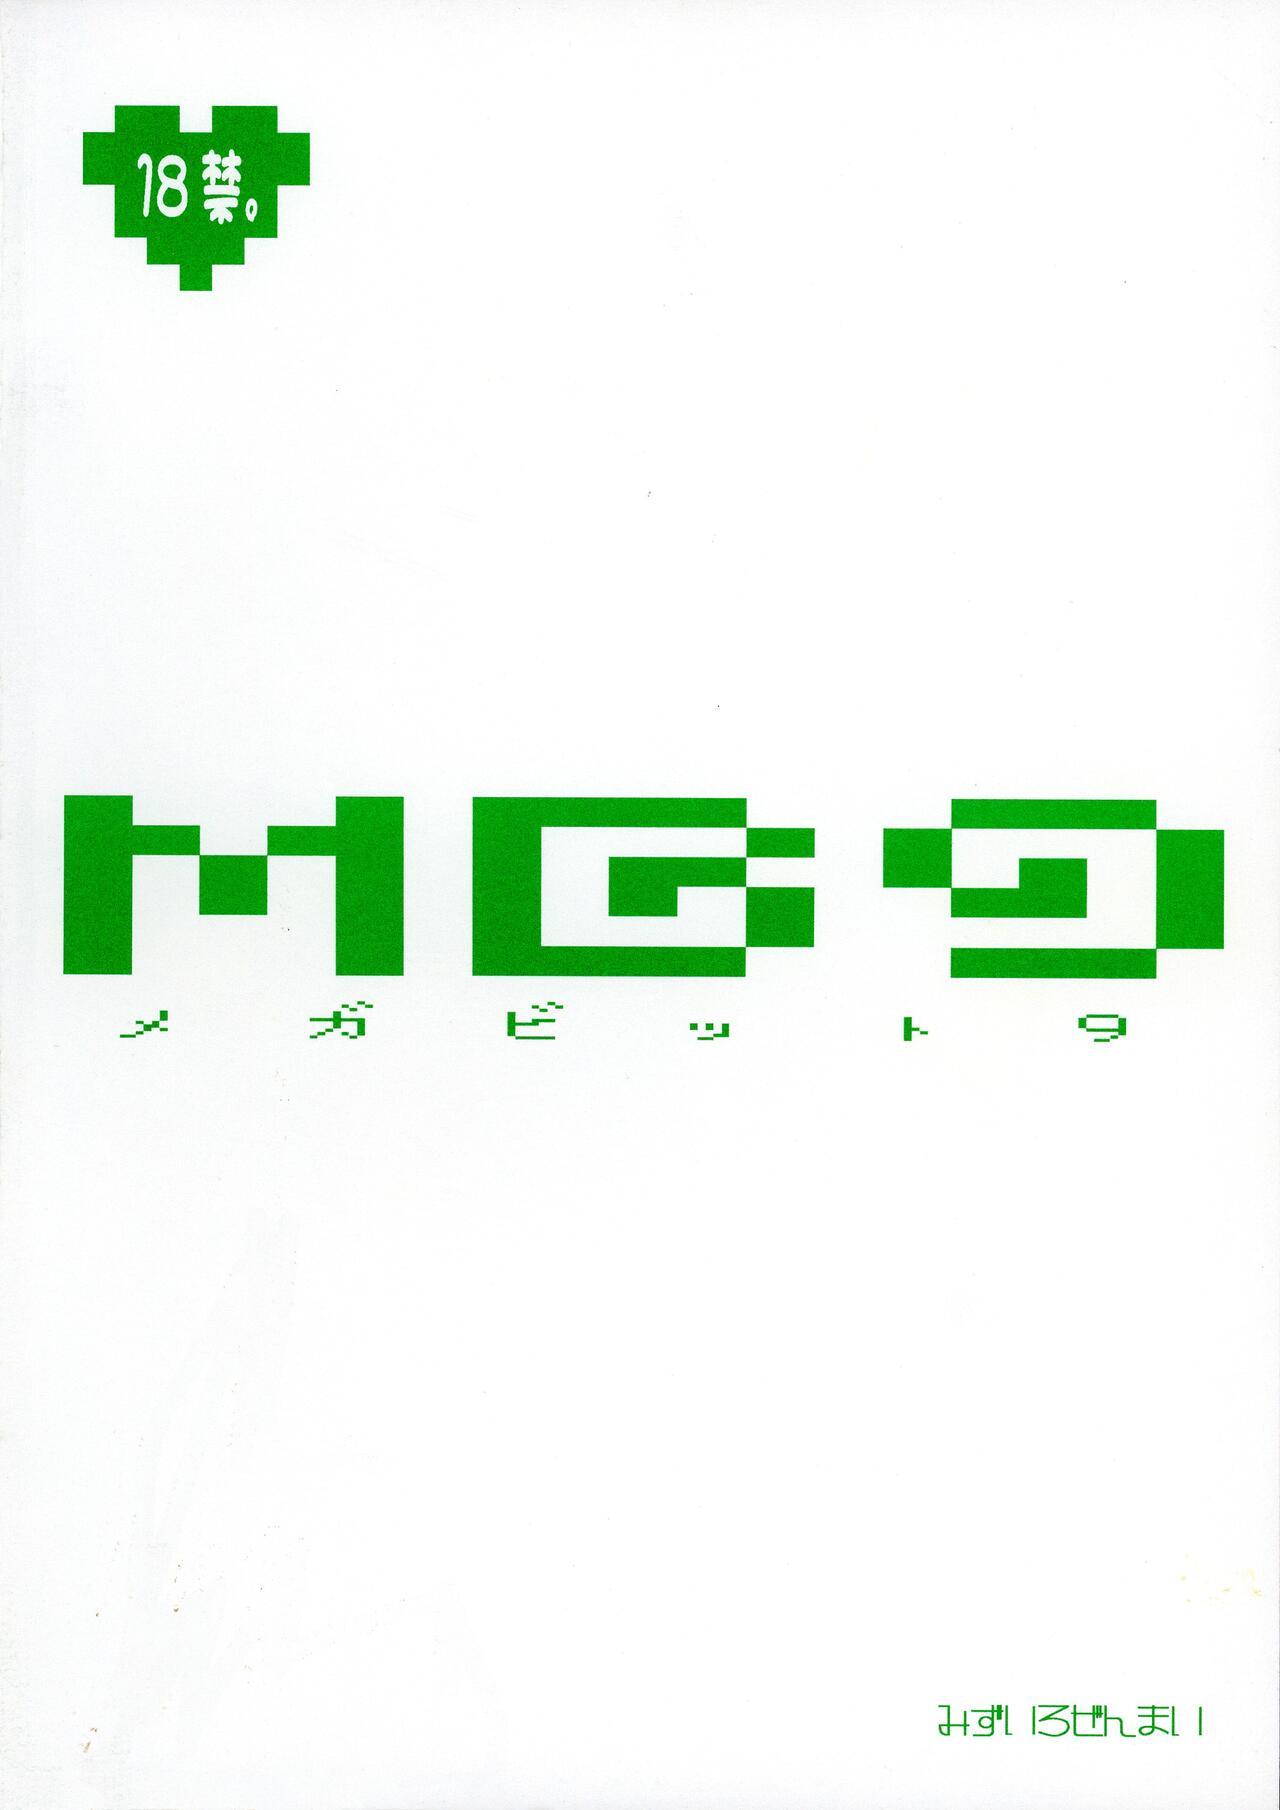 MG Megabit 9 1